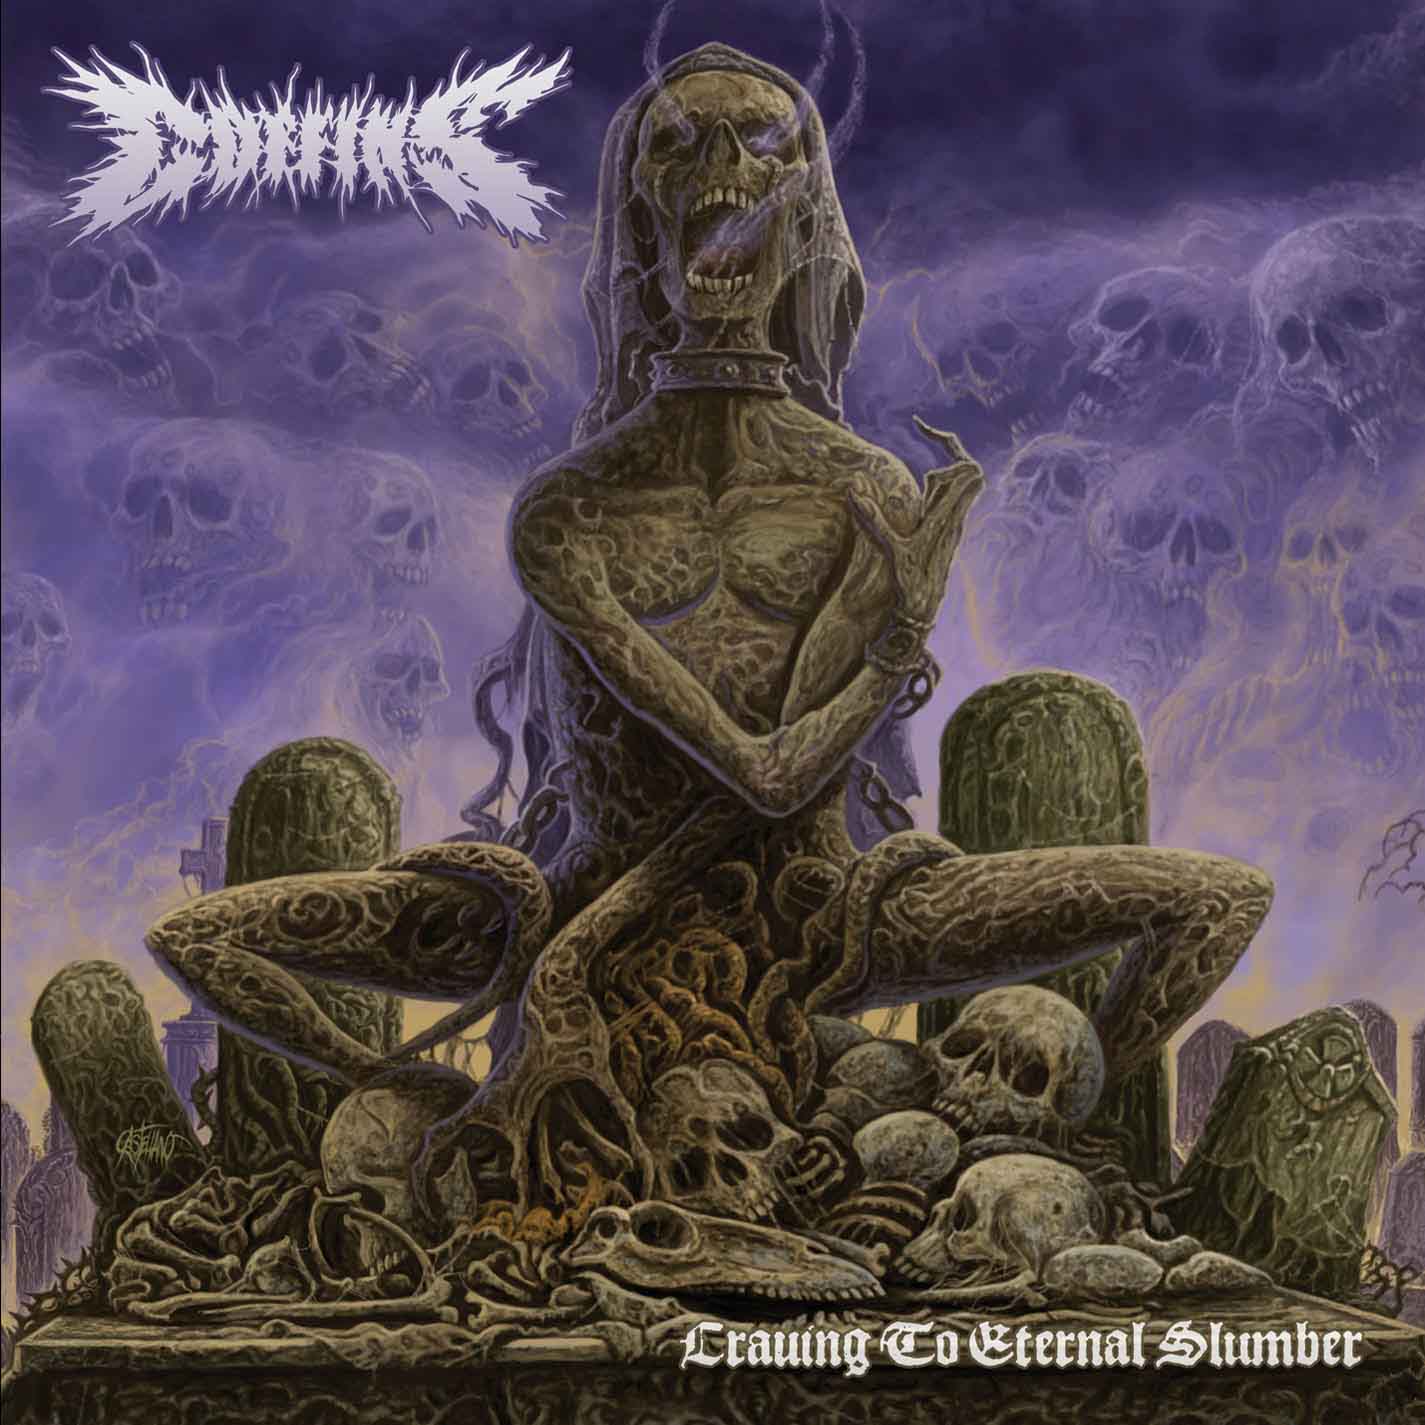 Coffin storm. Eternal Slumber devilish Trio. Armagedda альбомы. Underground Death Metal с нечитаемым названием.